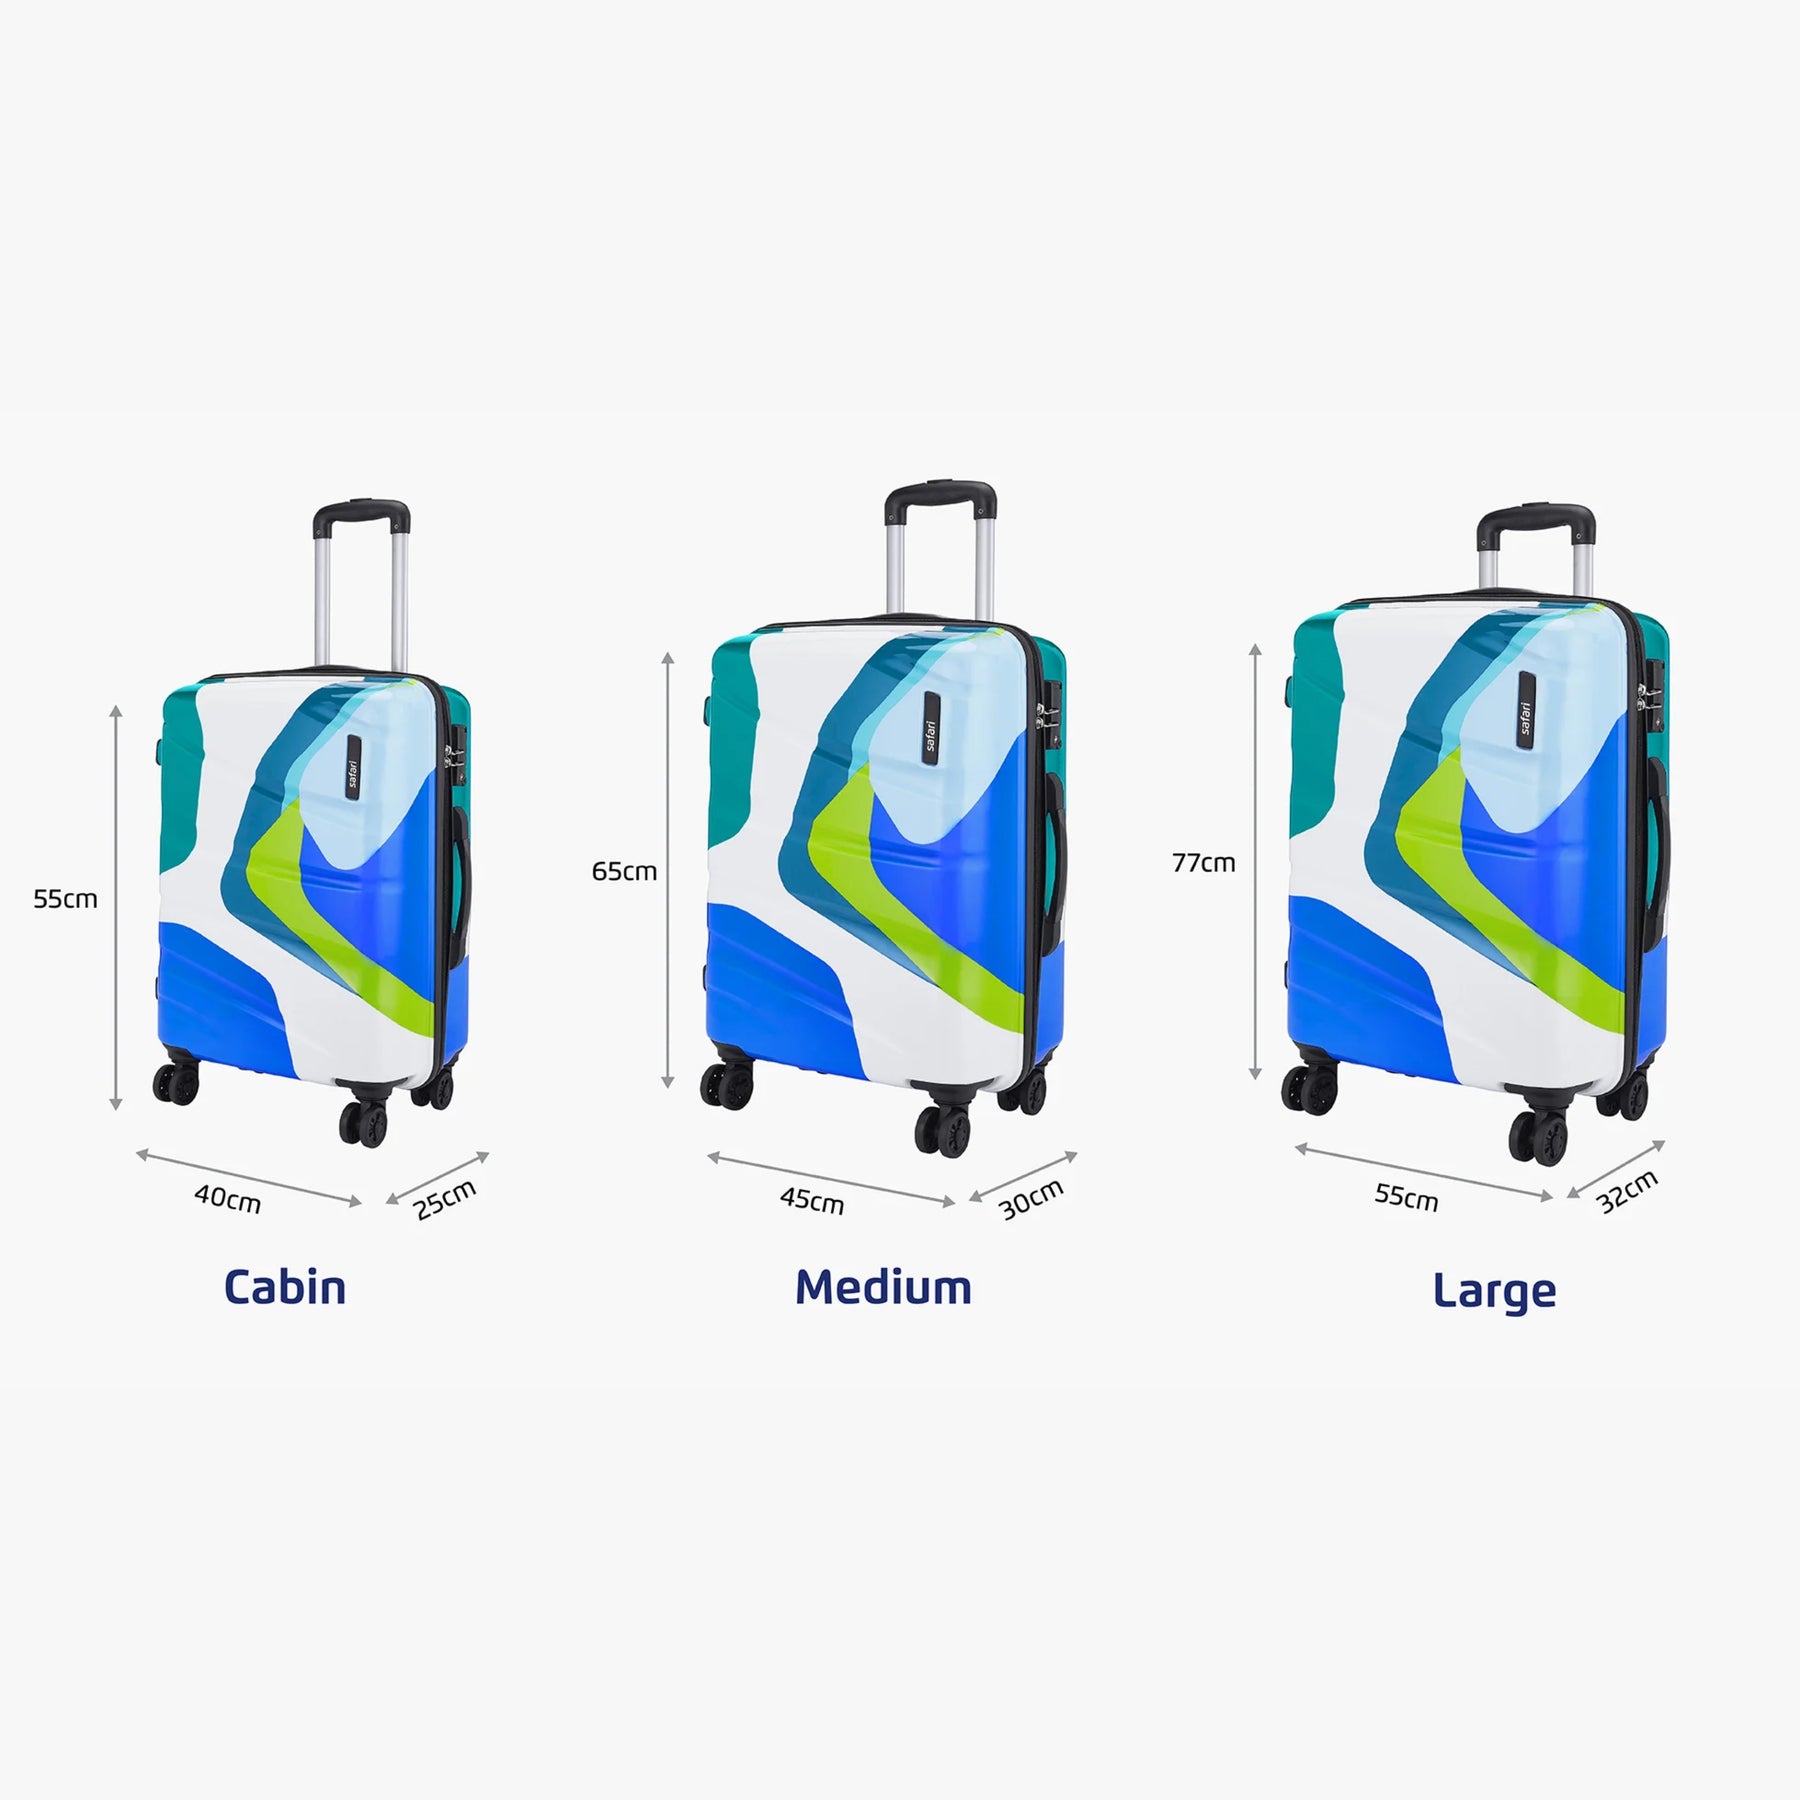 Chroma Plus Hard luggage With TSA Lock, Dual Wheel and Detailed Interi